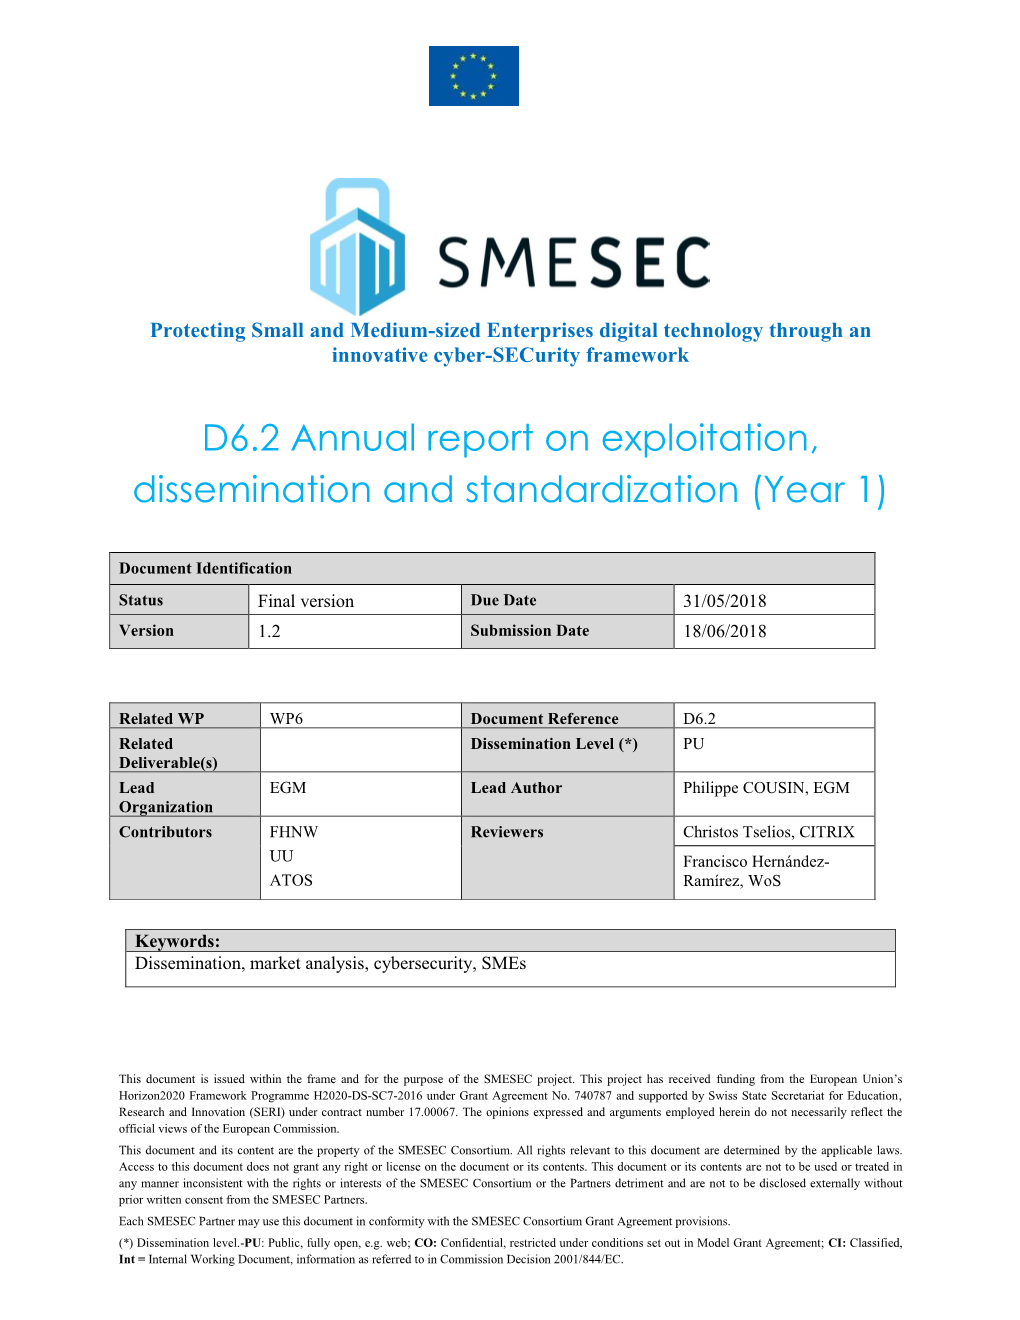 SMESEC D6.2 SMESEC Annual Exploitation Dissemination